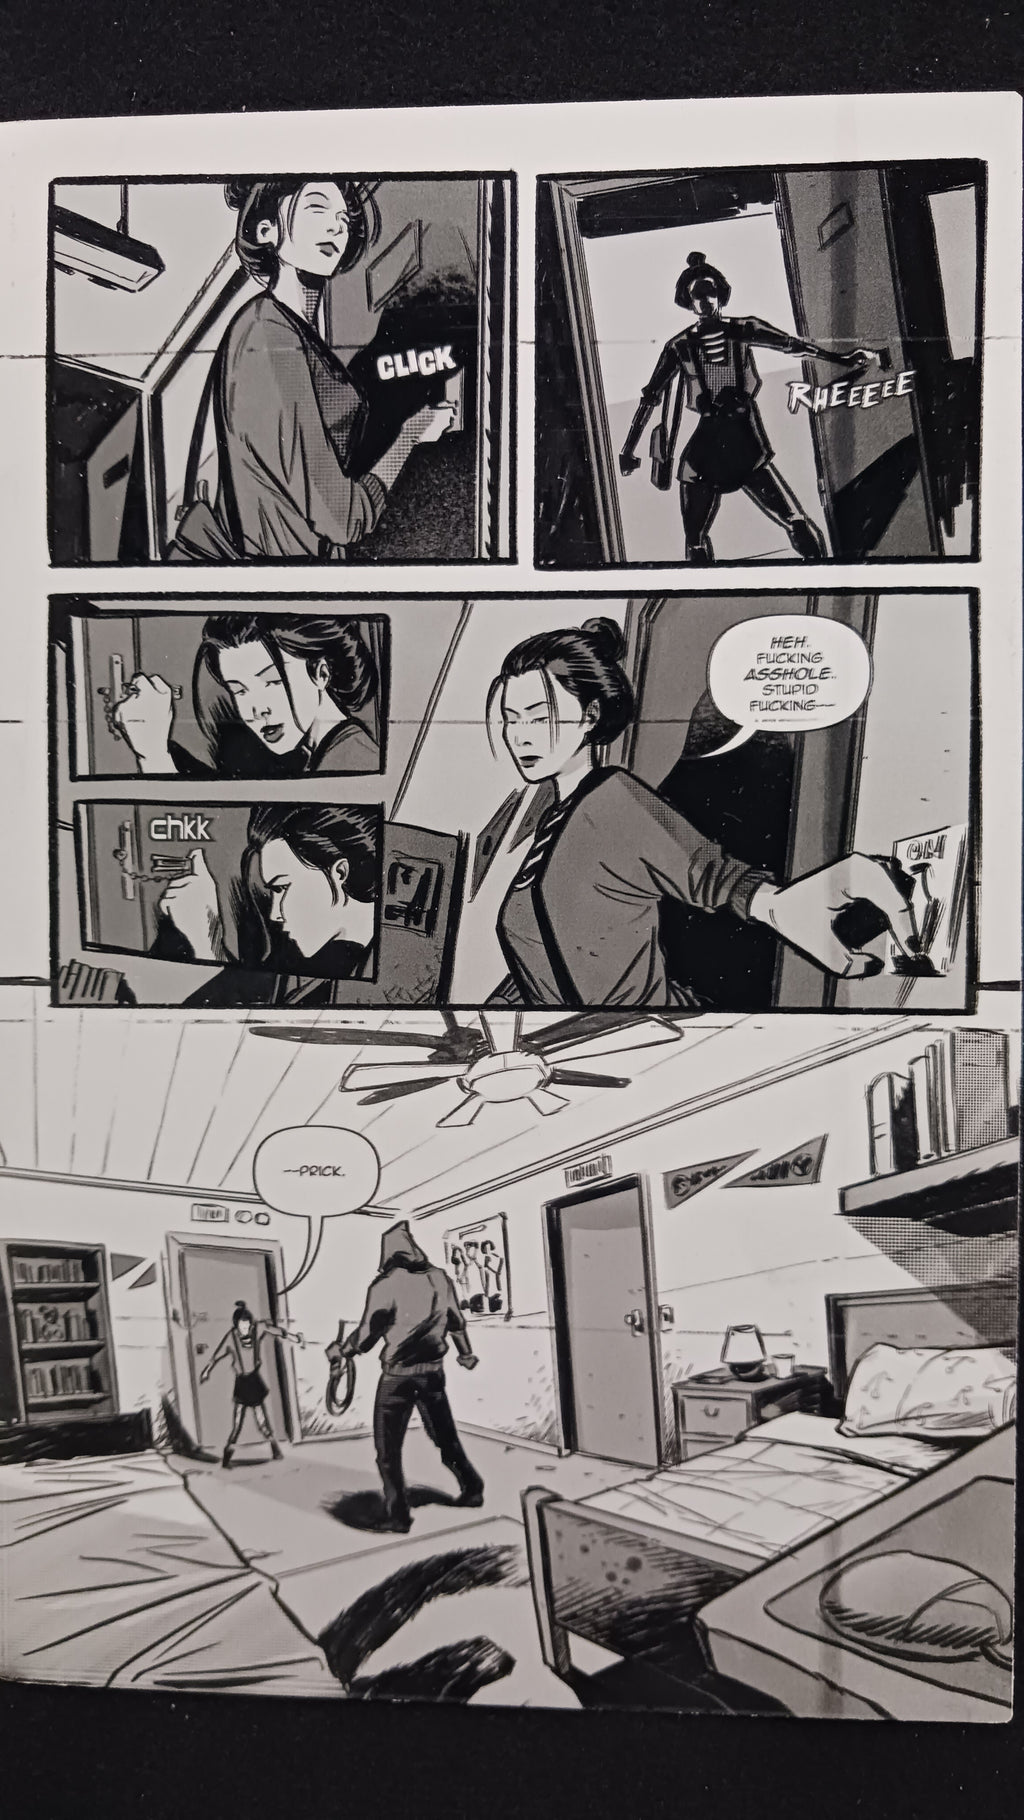 Banshees #1 - Page 2 - PRESSWORKS - Comic Art - Printer Plate - Black